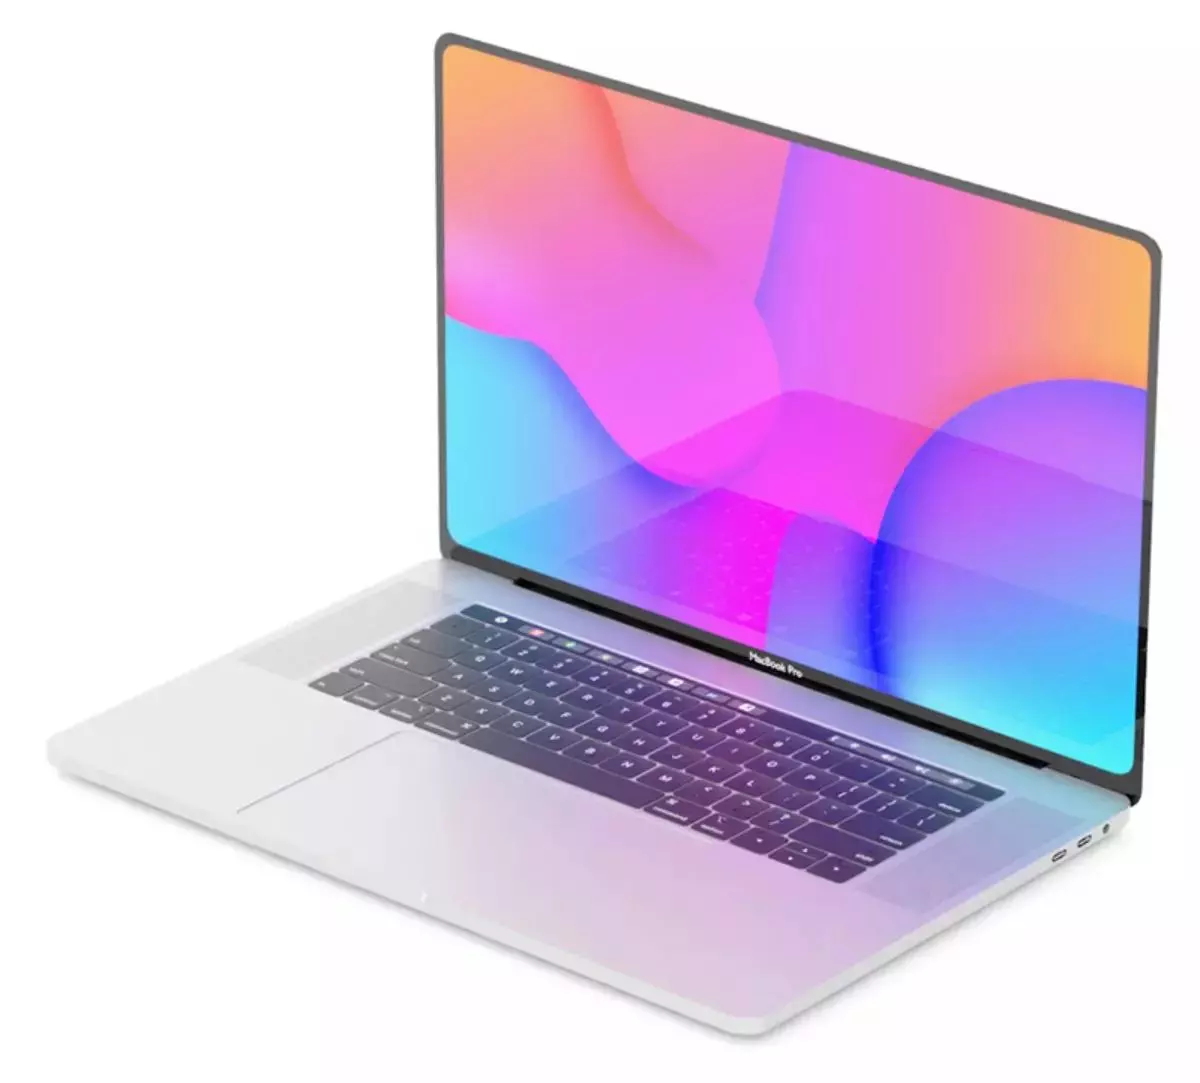 MacBook Pro revamp expected to debut in September, October, or November